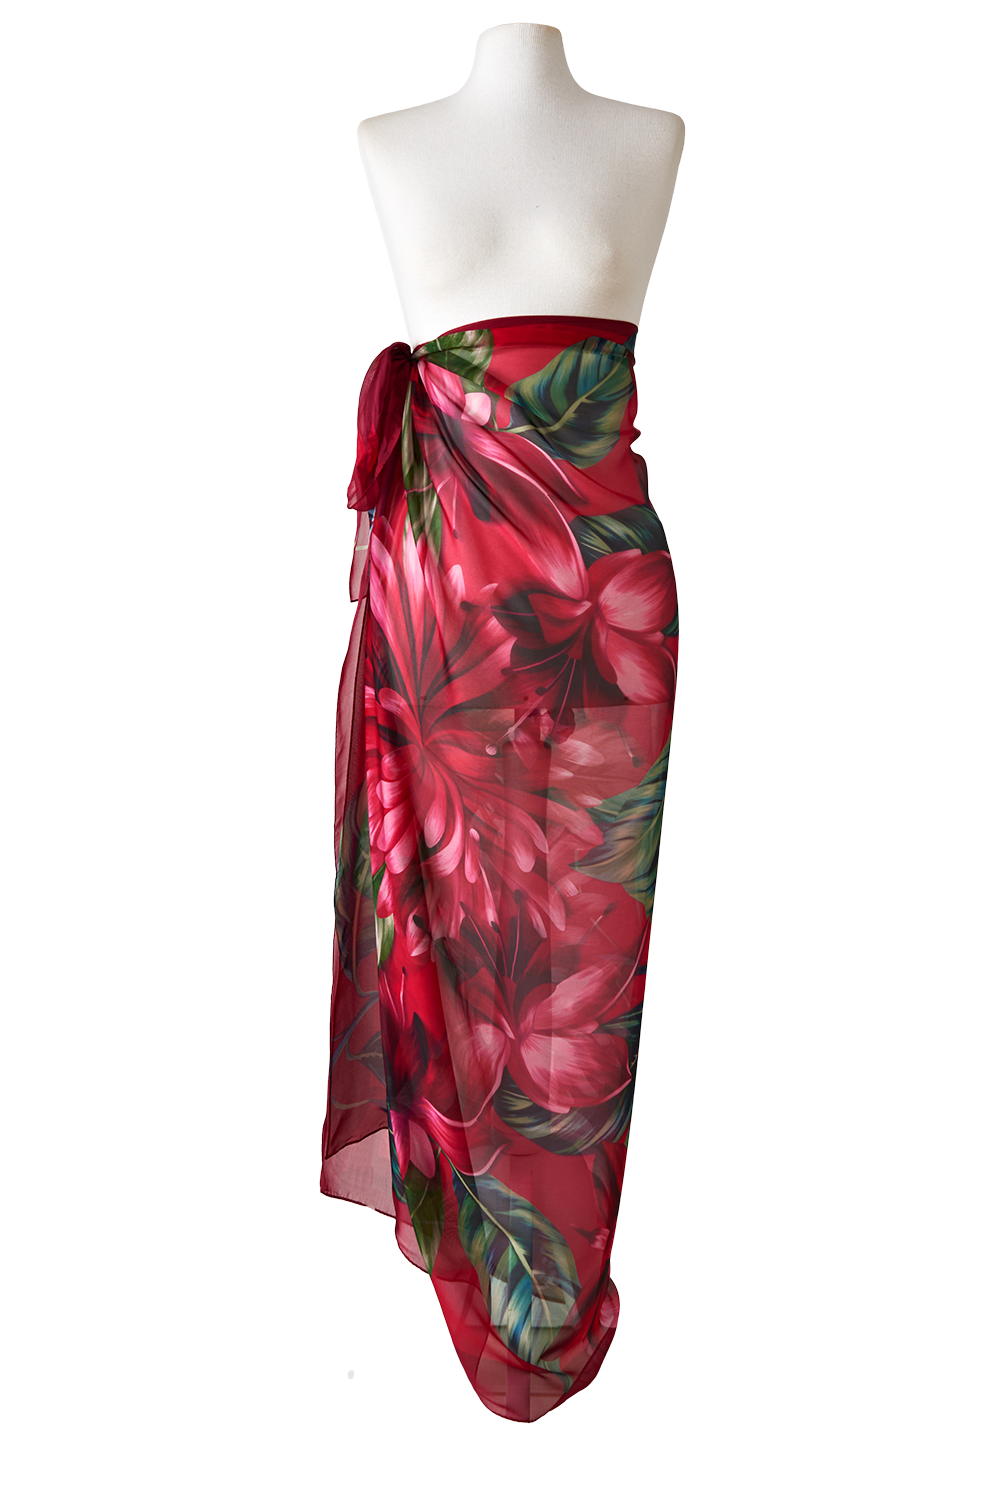 Max scarf Flor Flamingo magenta on silk mousseline | 130x130cm